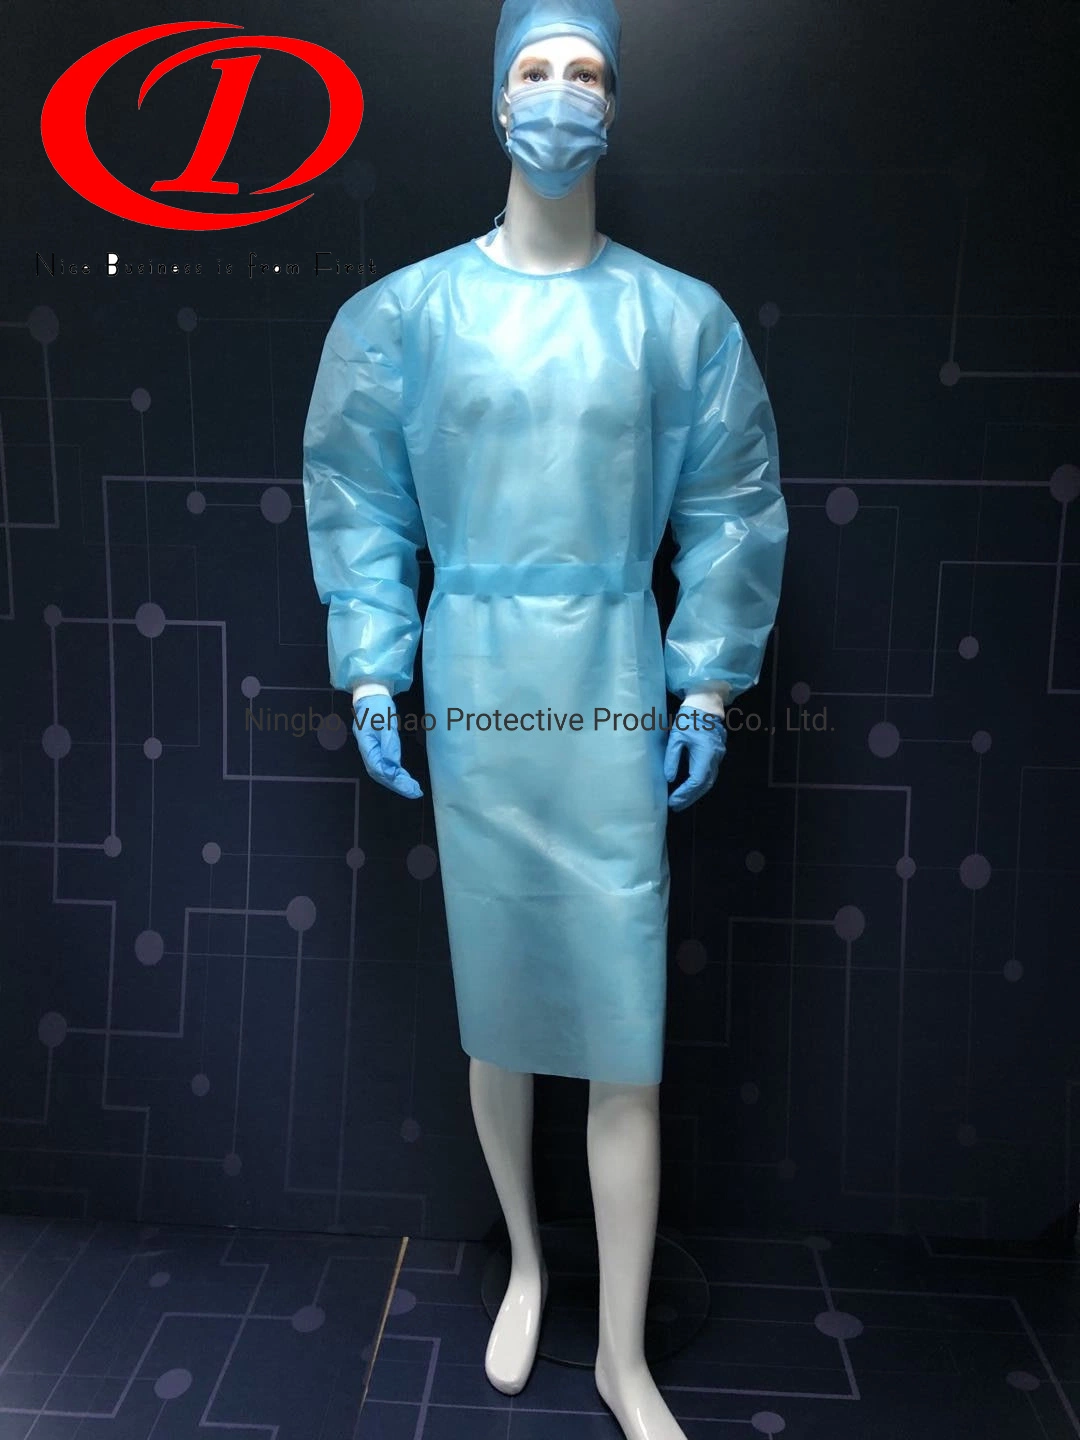 Nível Wholesale/Suppliers 1 PP+PE espessura vestido de isolamento descartáveis médico-hospitalares